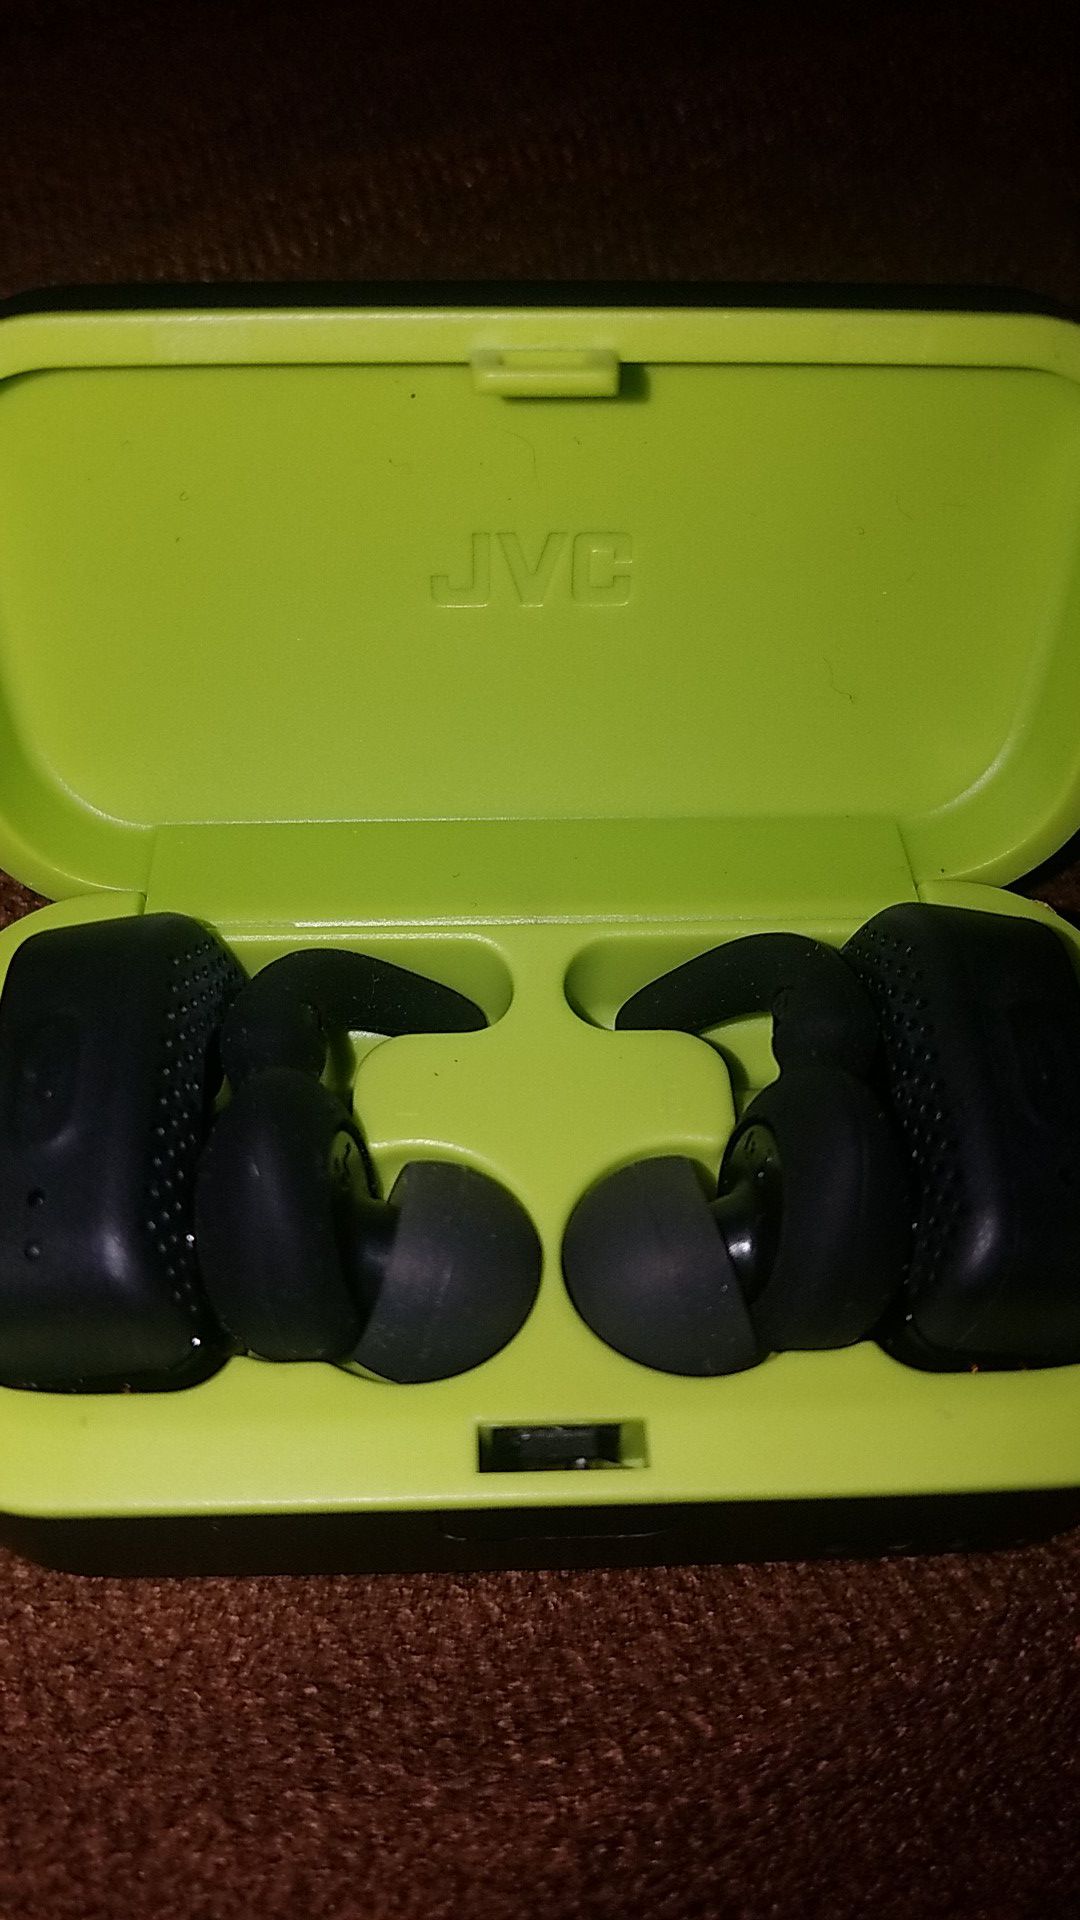 JVC earbuds